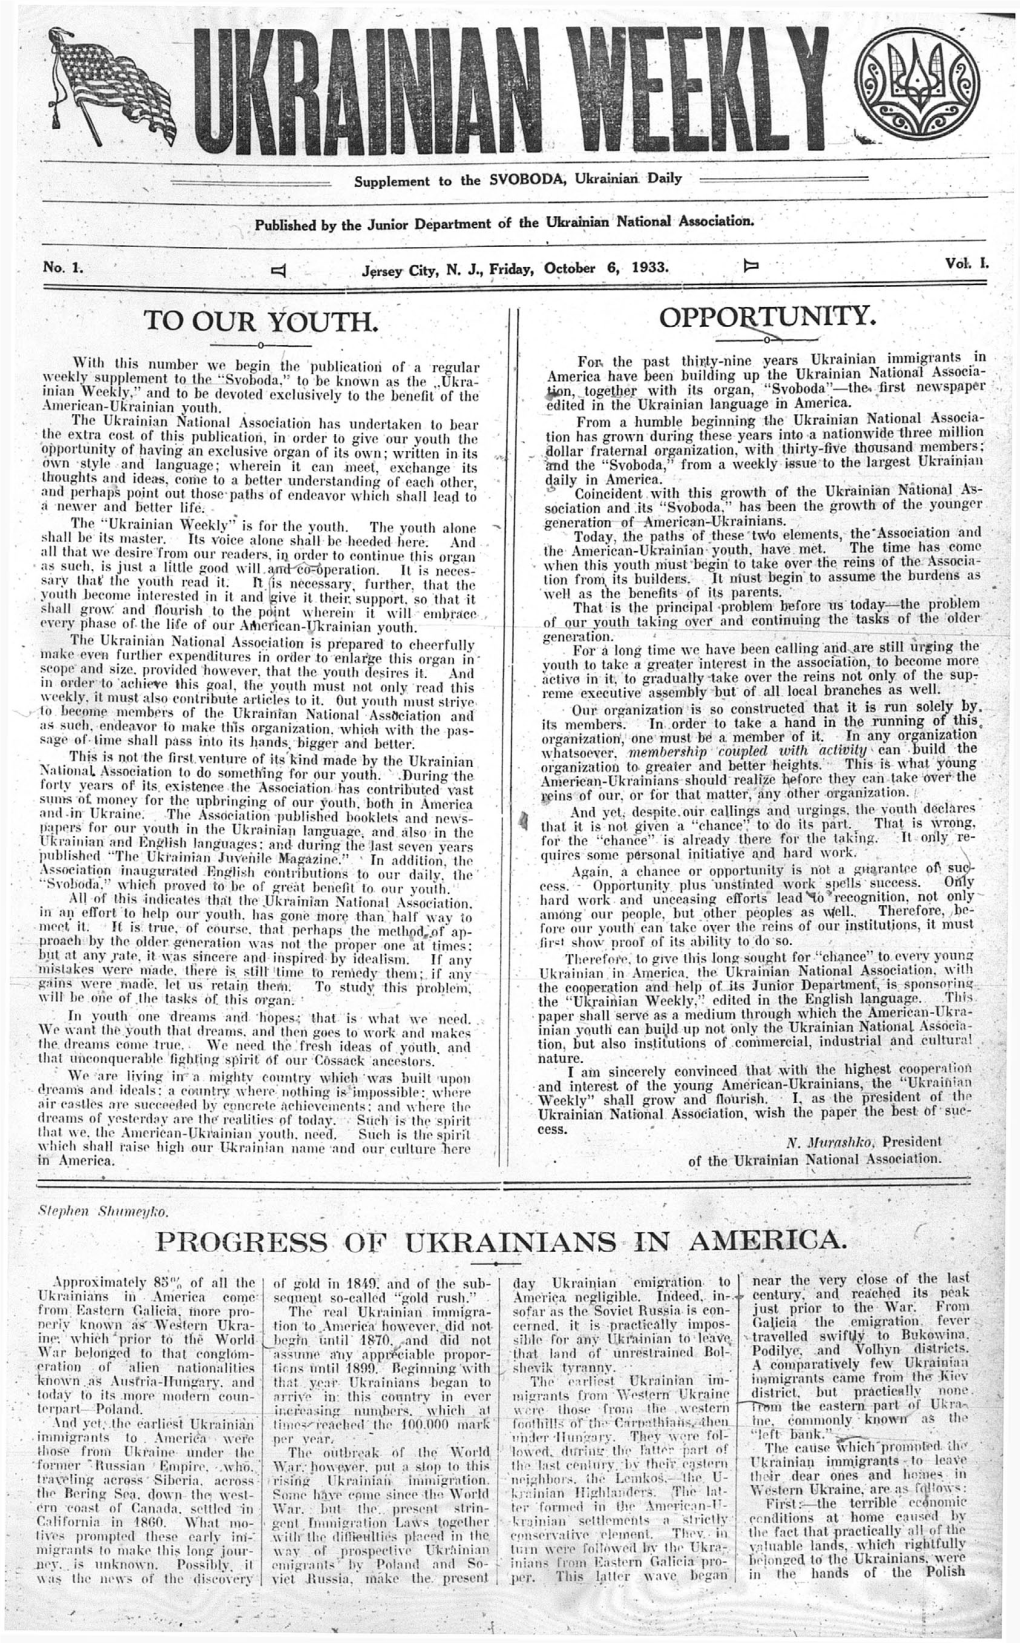 The Ukrainian Weekly 1933, No.1